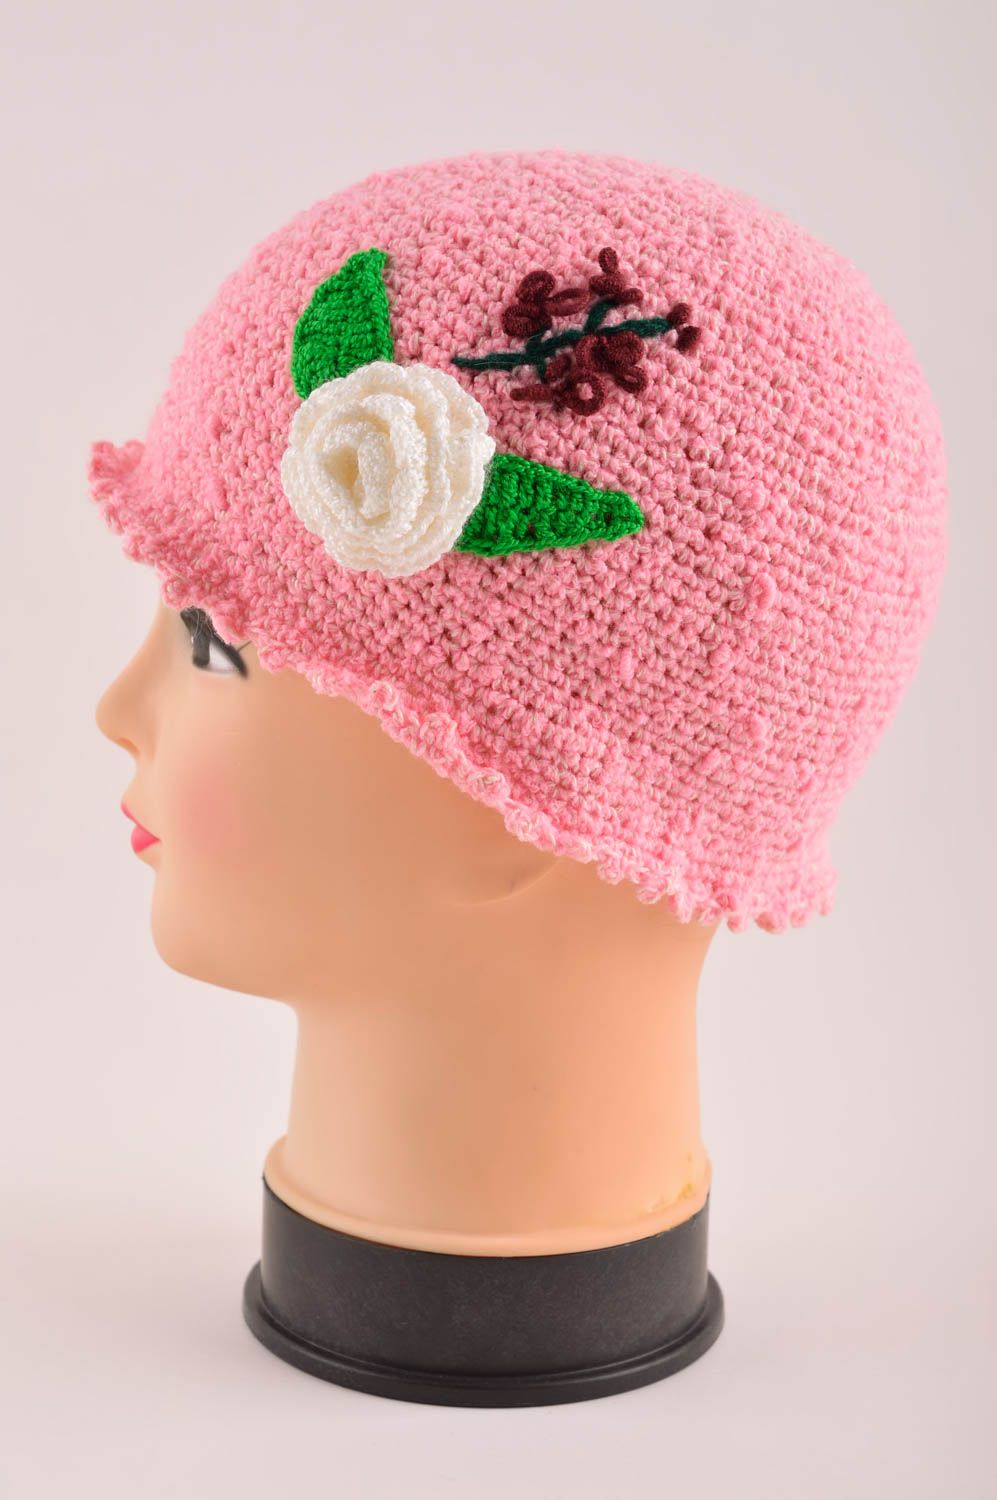 Хэнд мейд вязаная шапка для детей весенняя шапка детская вязаная шапочка роза  фото 3